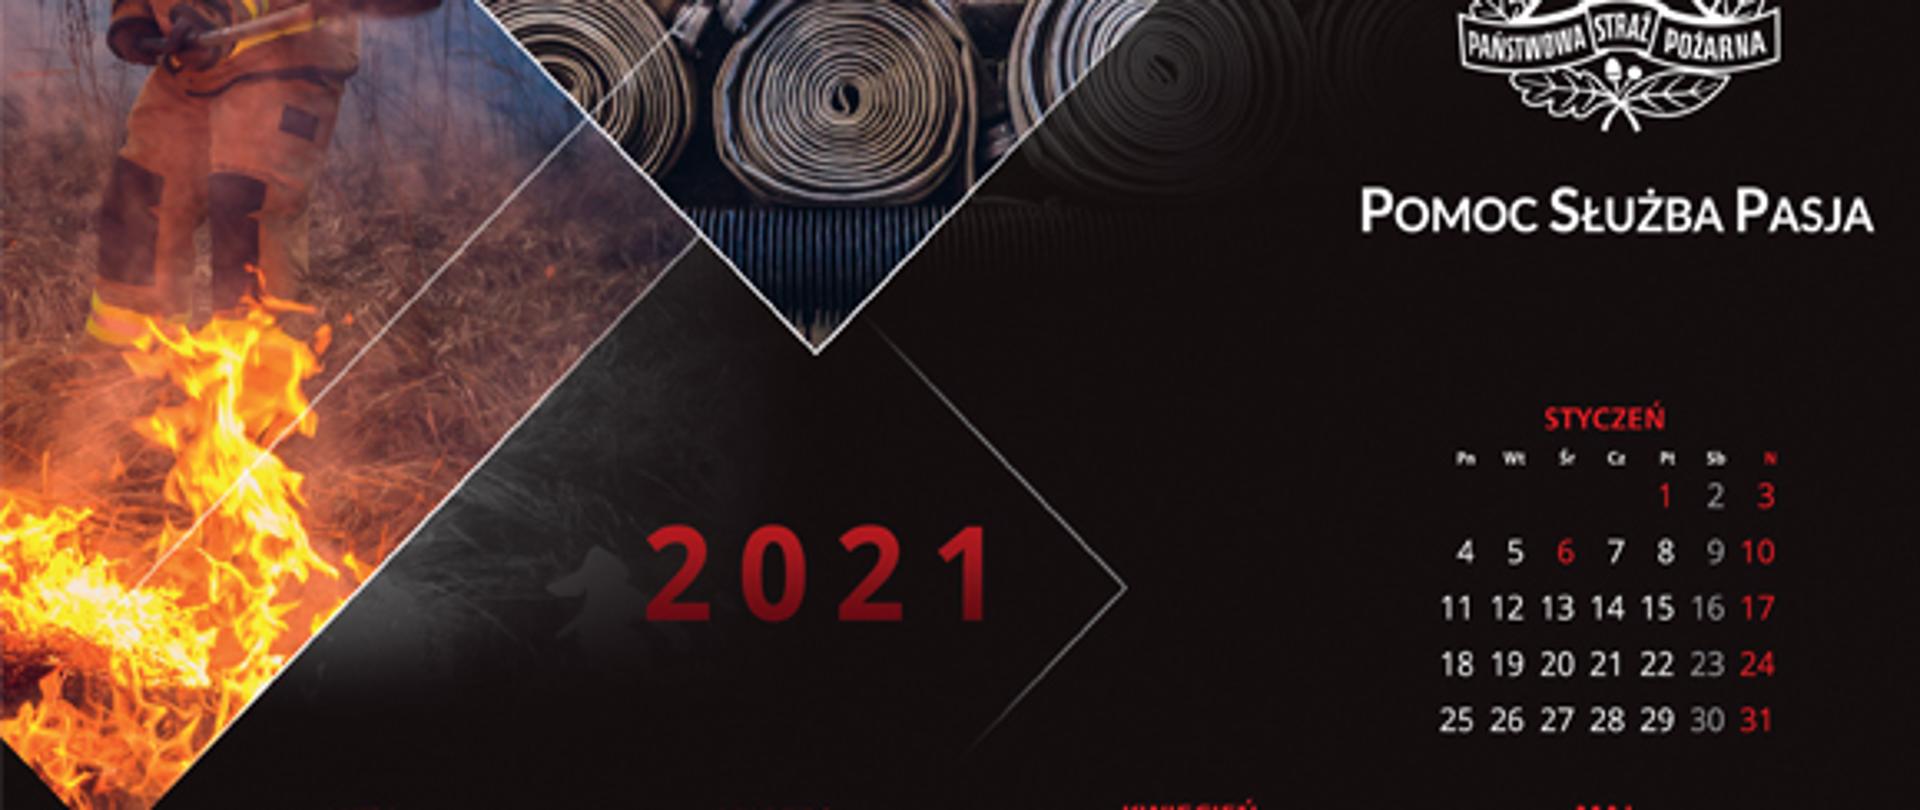 rycina kalendarza strażackiego na 2021 rok